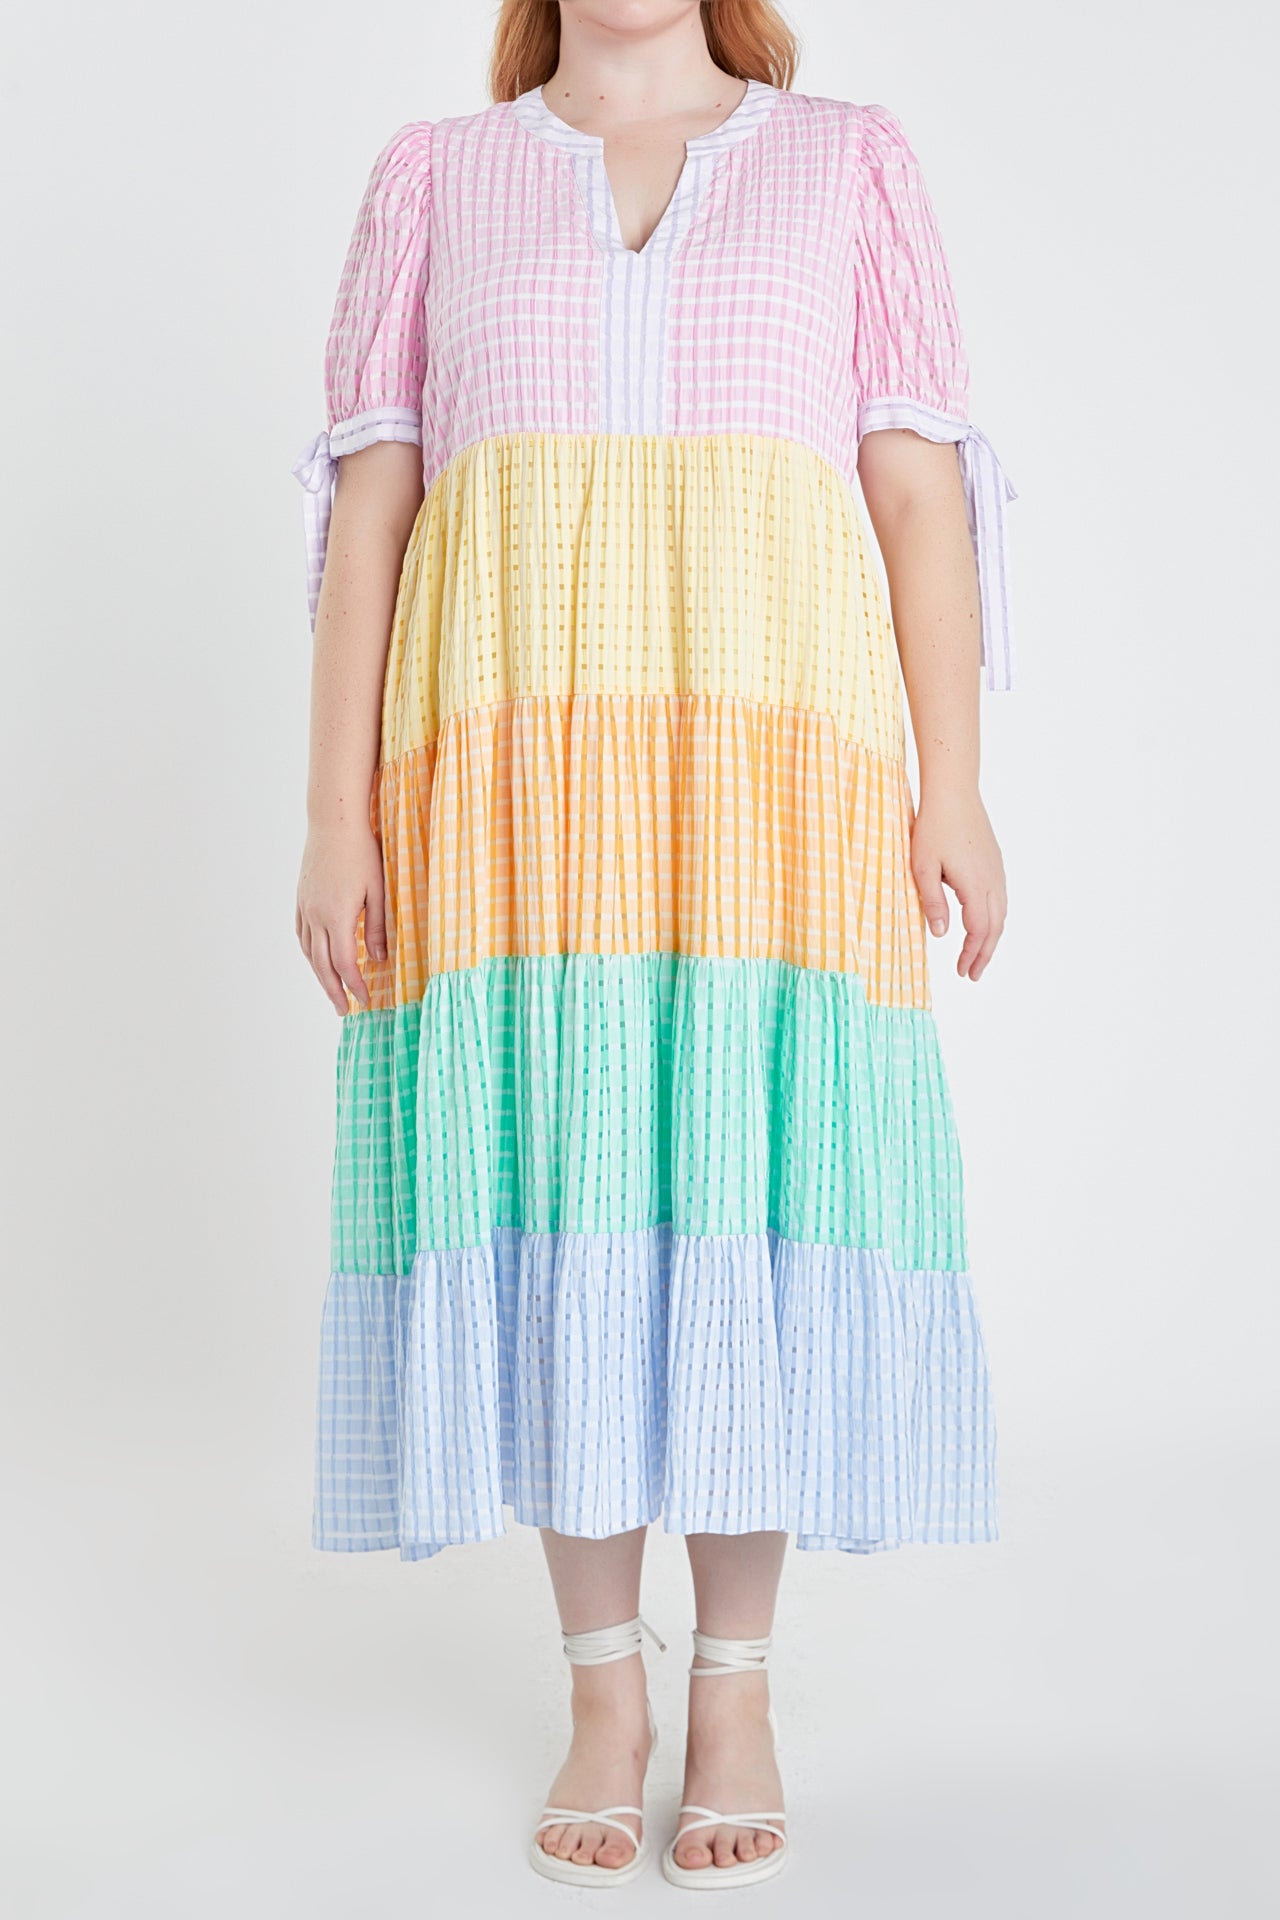 Tie Dye Dress Patterns: Colorblock Dress